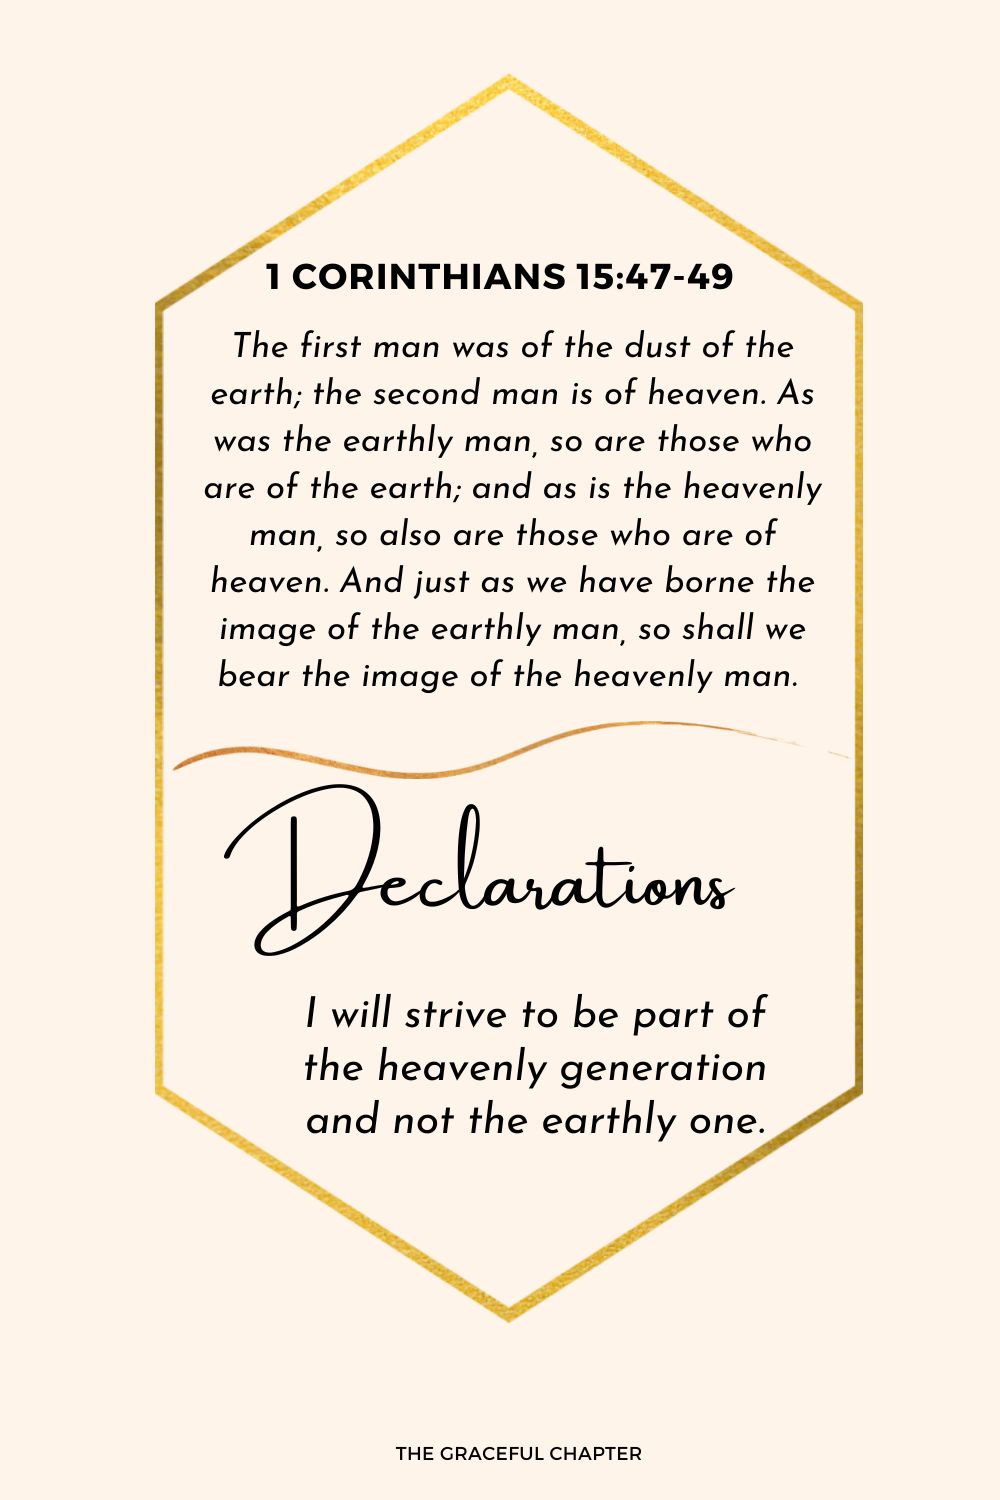 Declaration - Corinthians 15:47-49